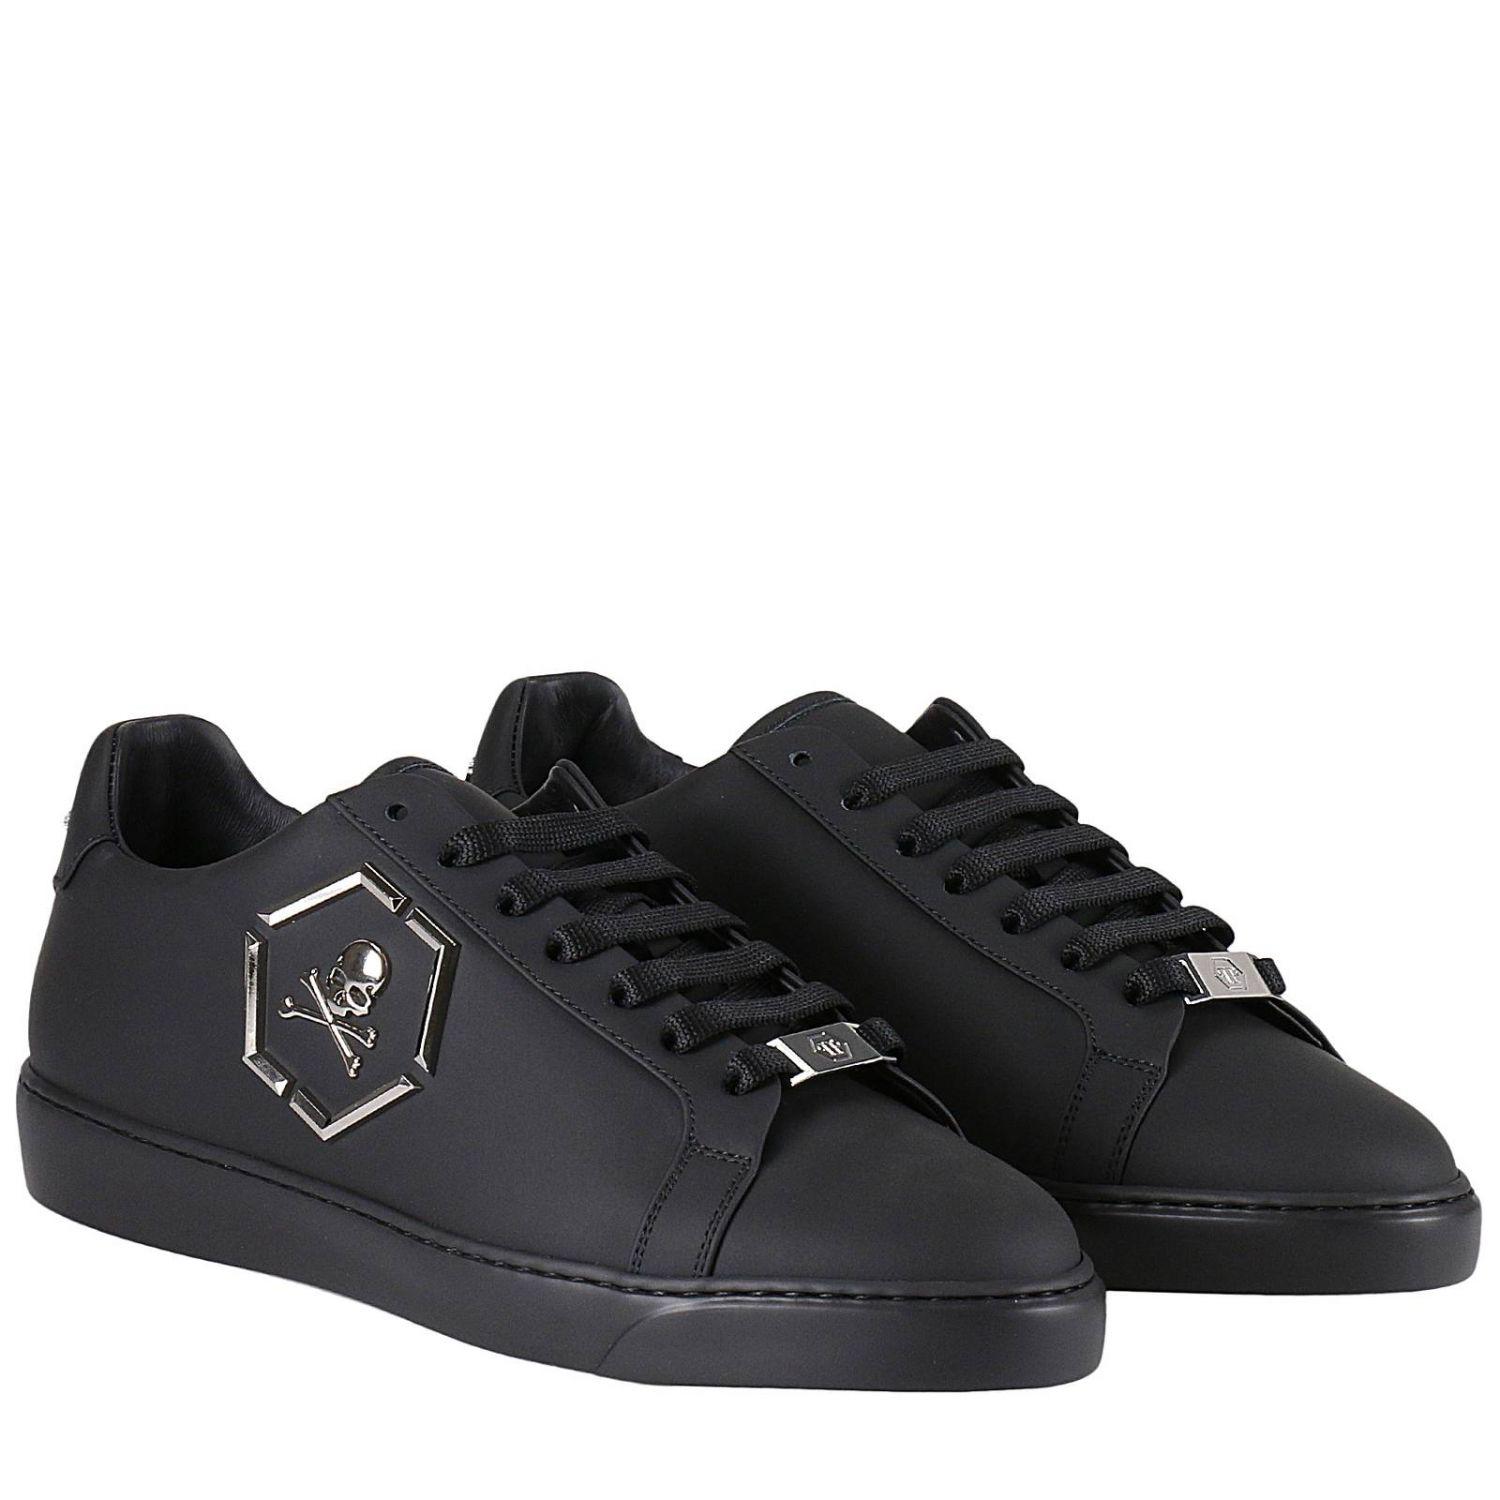 Lyst - Philipp Plein Sneakers Shoes Men in Black for Men